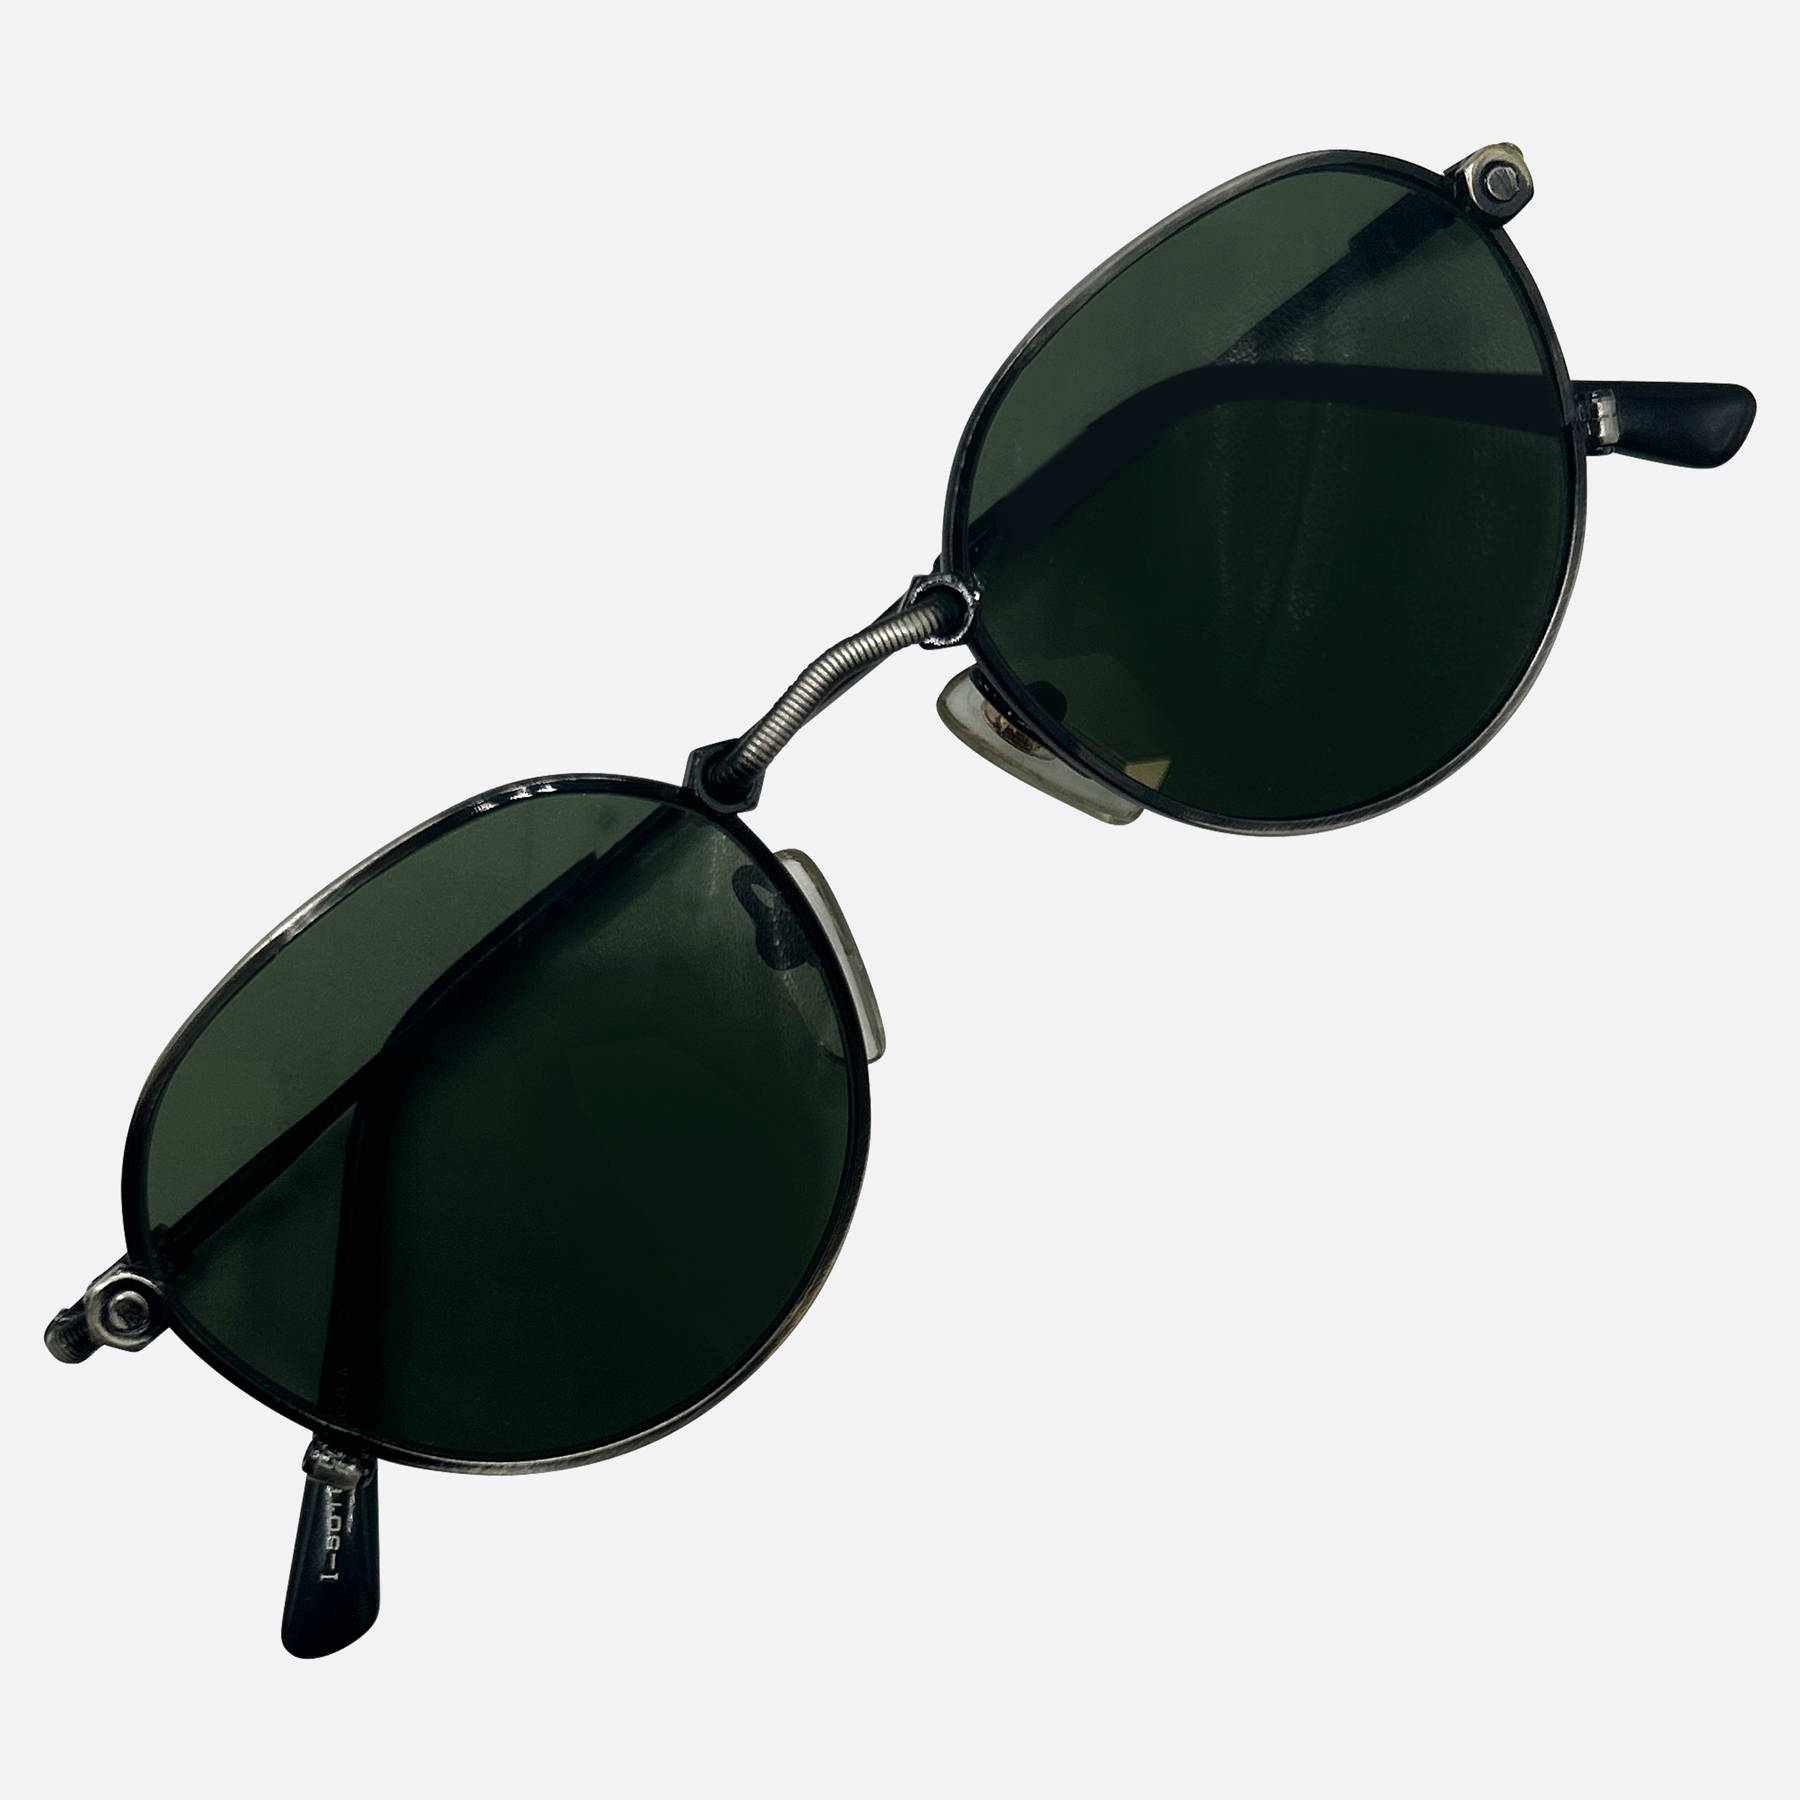 TILLER 90s Grunge Sunglasses | Luxe Vintage